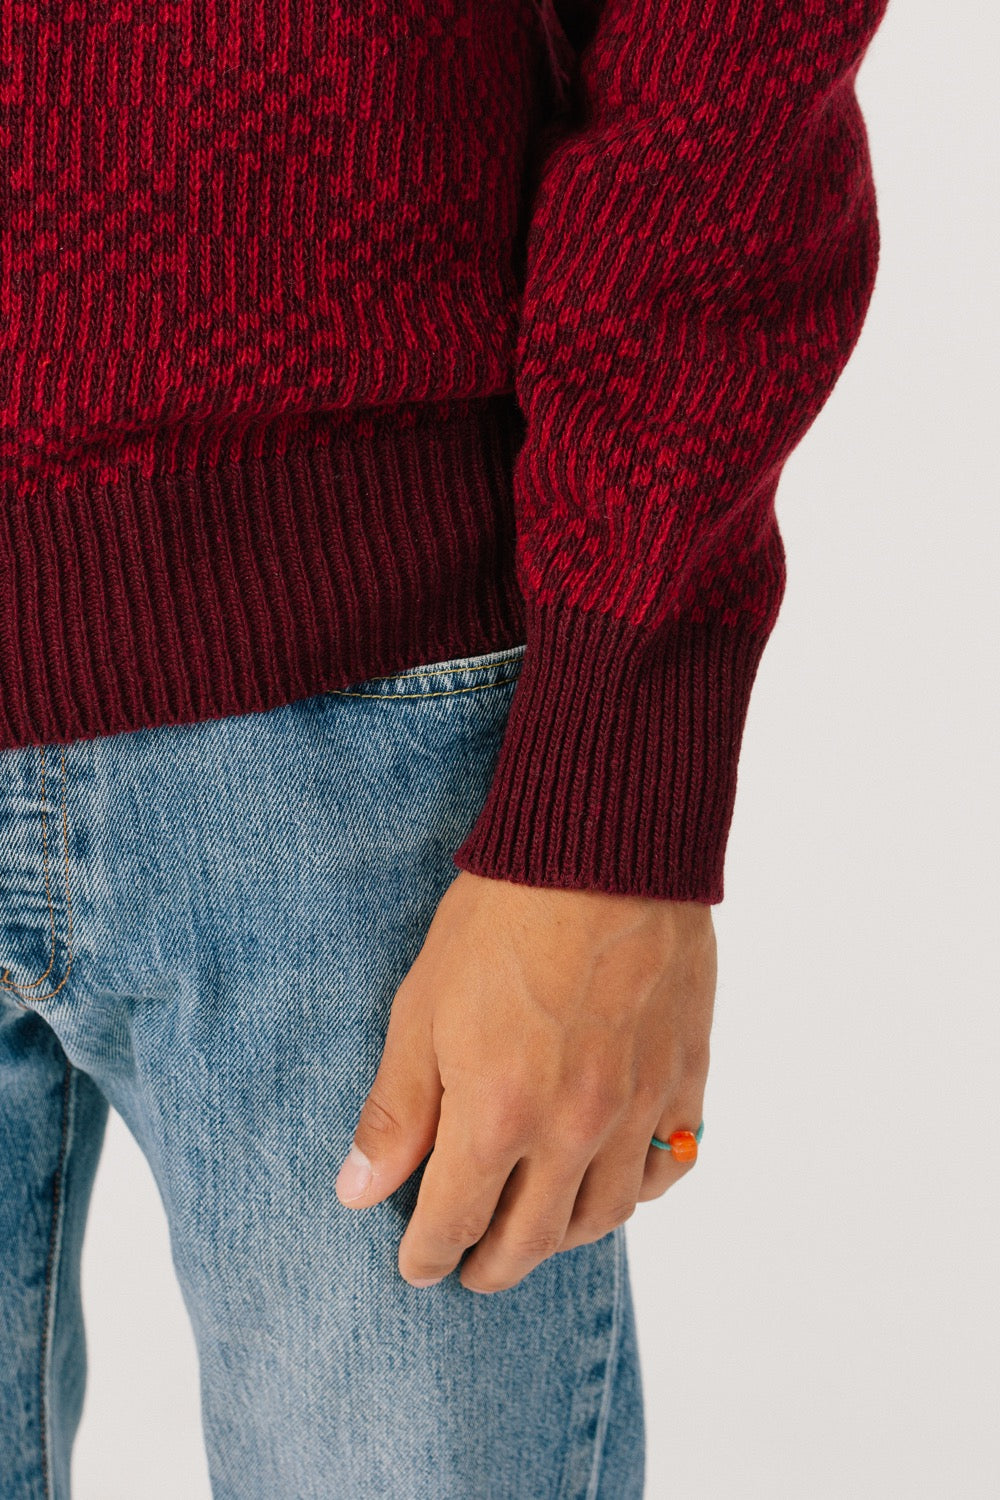 Detail of sweater cuff